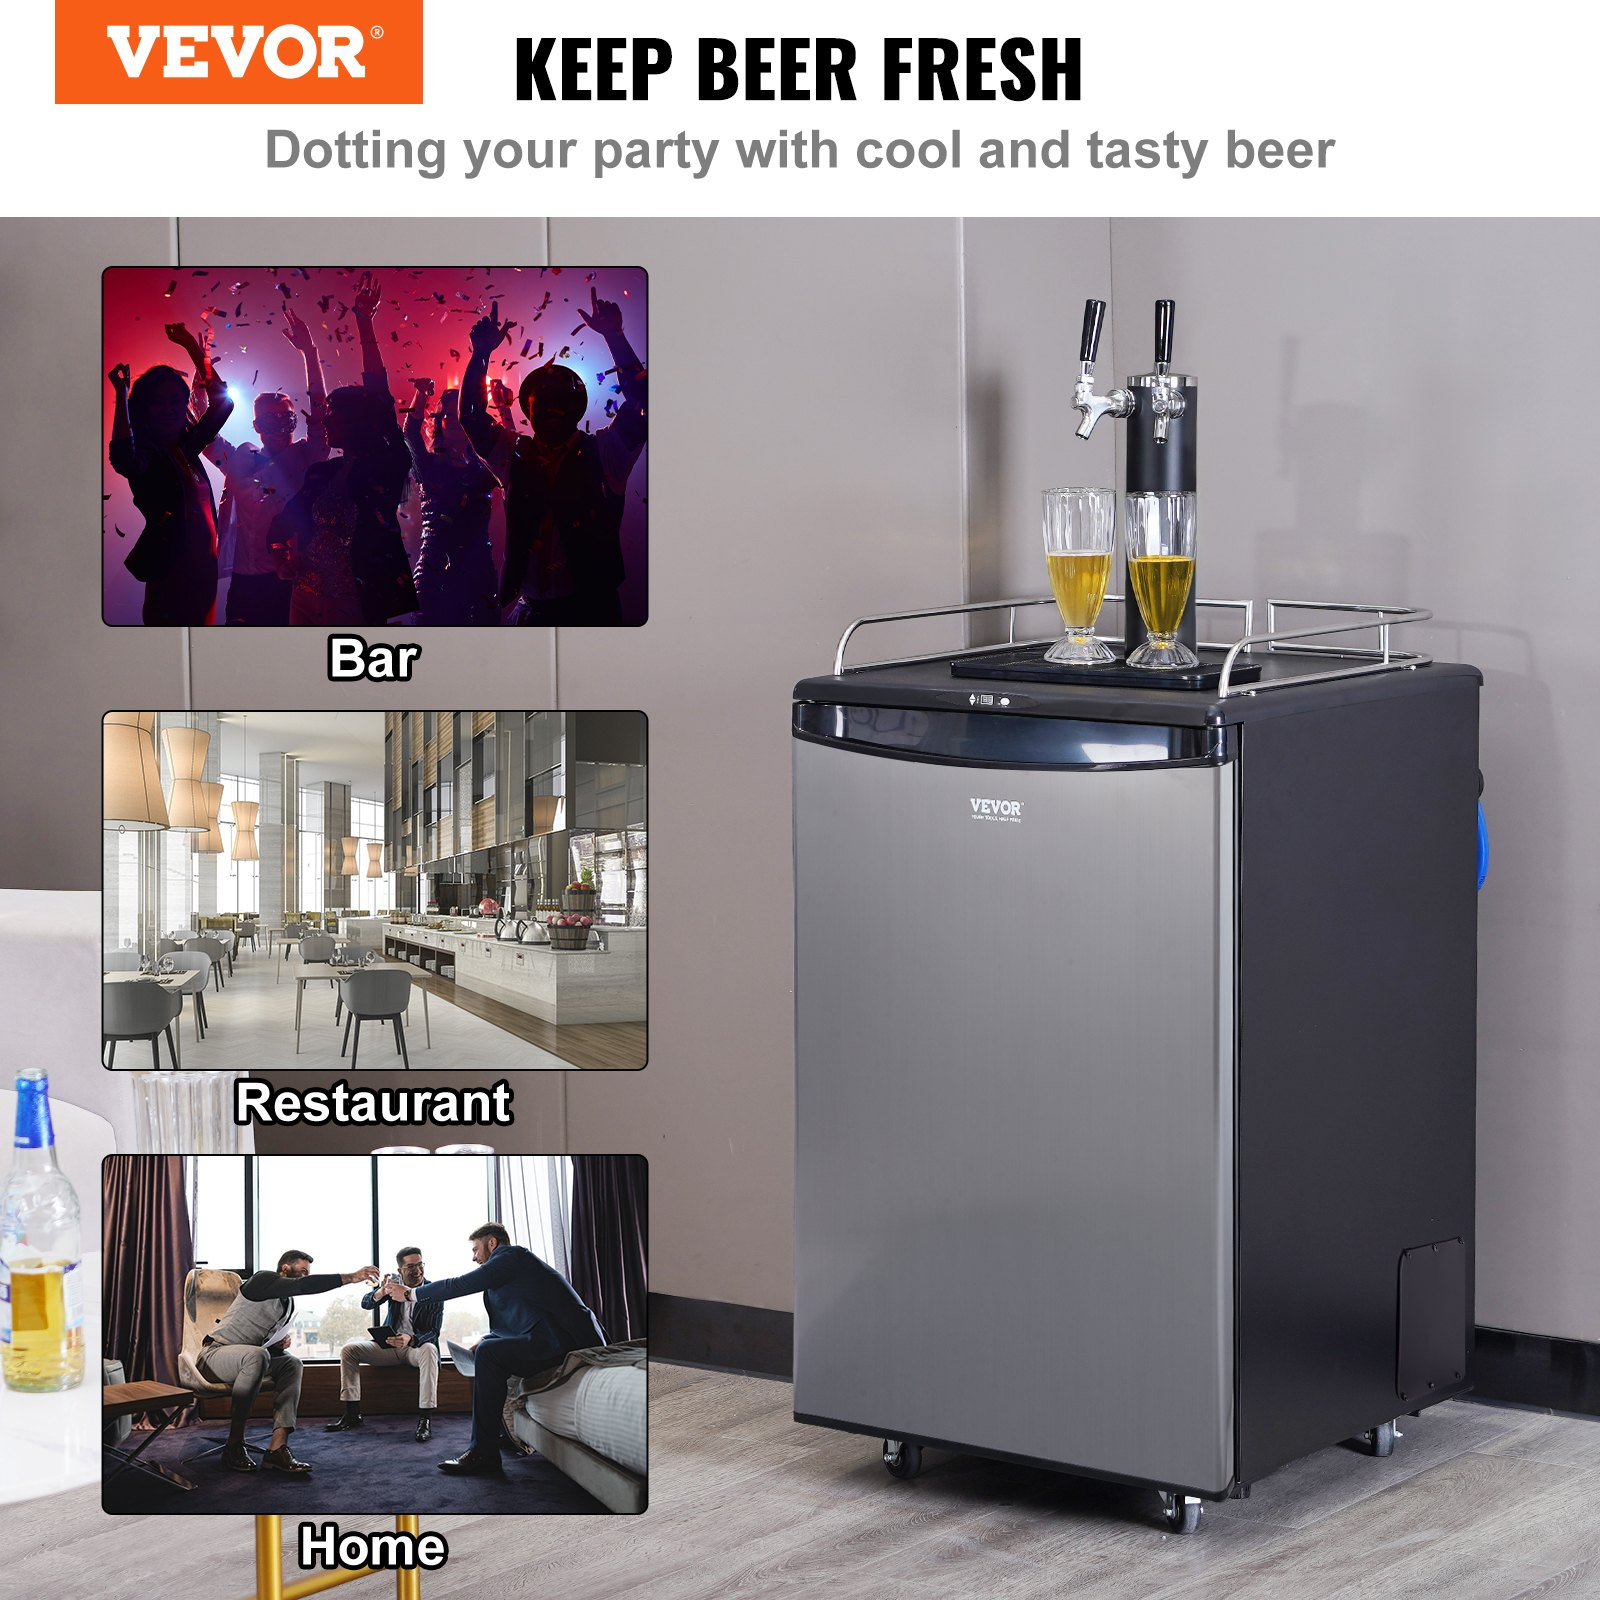 VEVOR Beer Kegerator Dual Tap Draft Beer Dispenser Full Size Keg Refrigerator